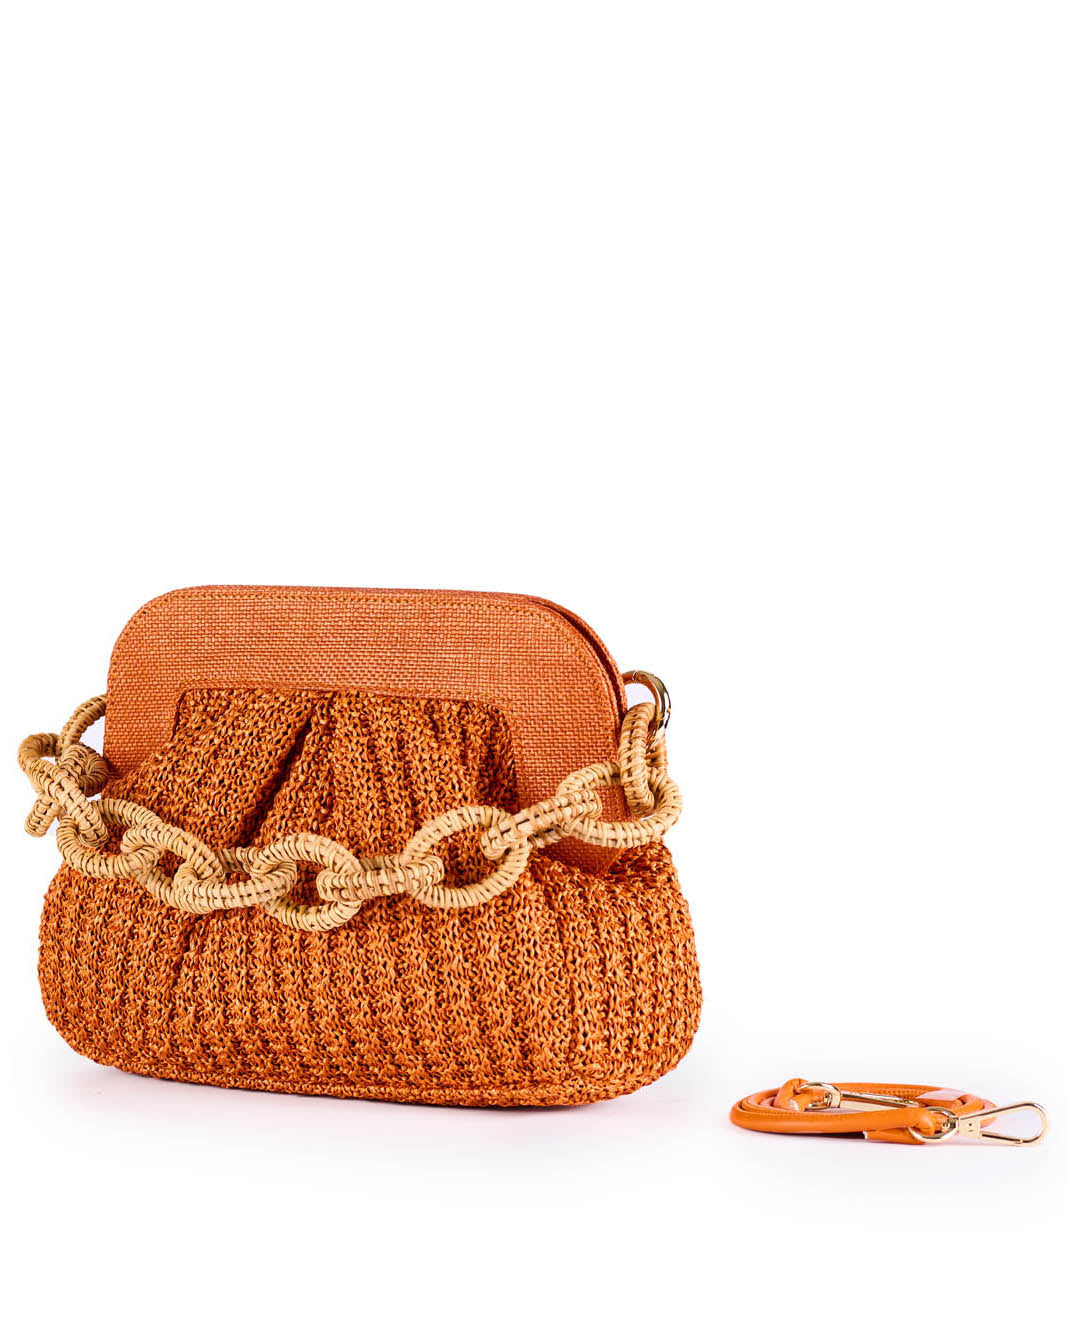 Orange woven handbag with chain strap and detachable shoulder strap